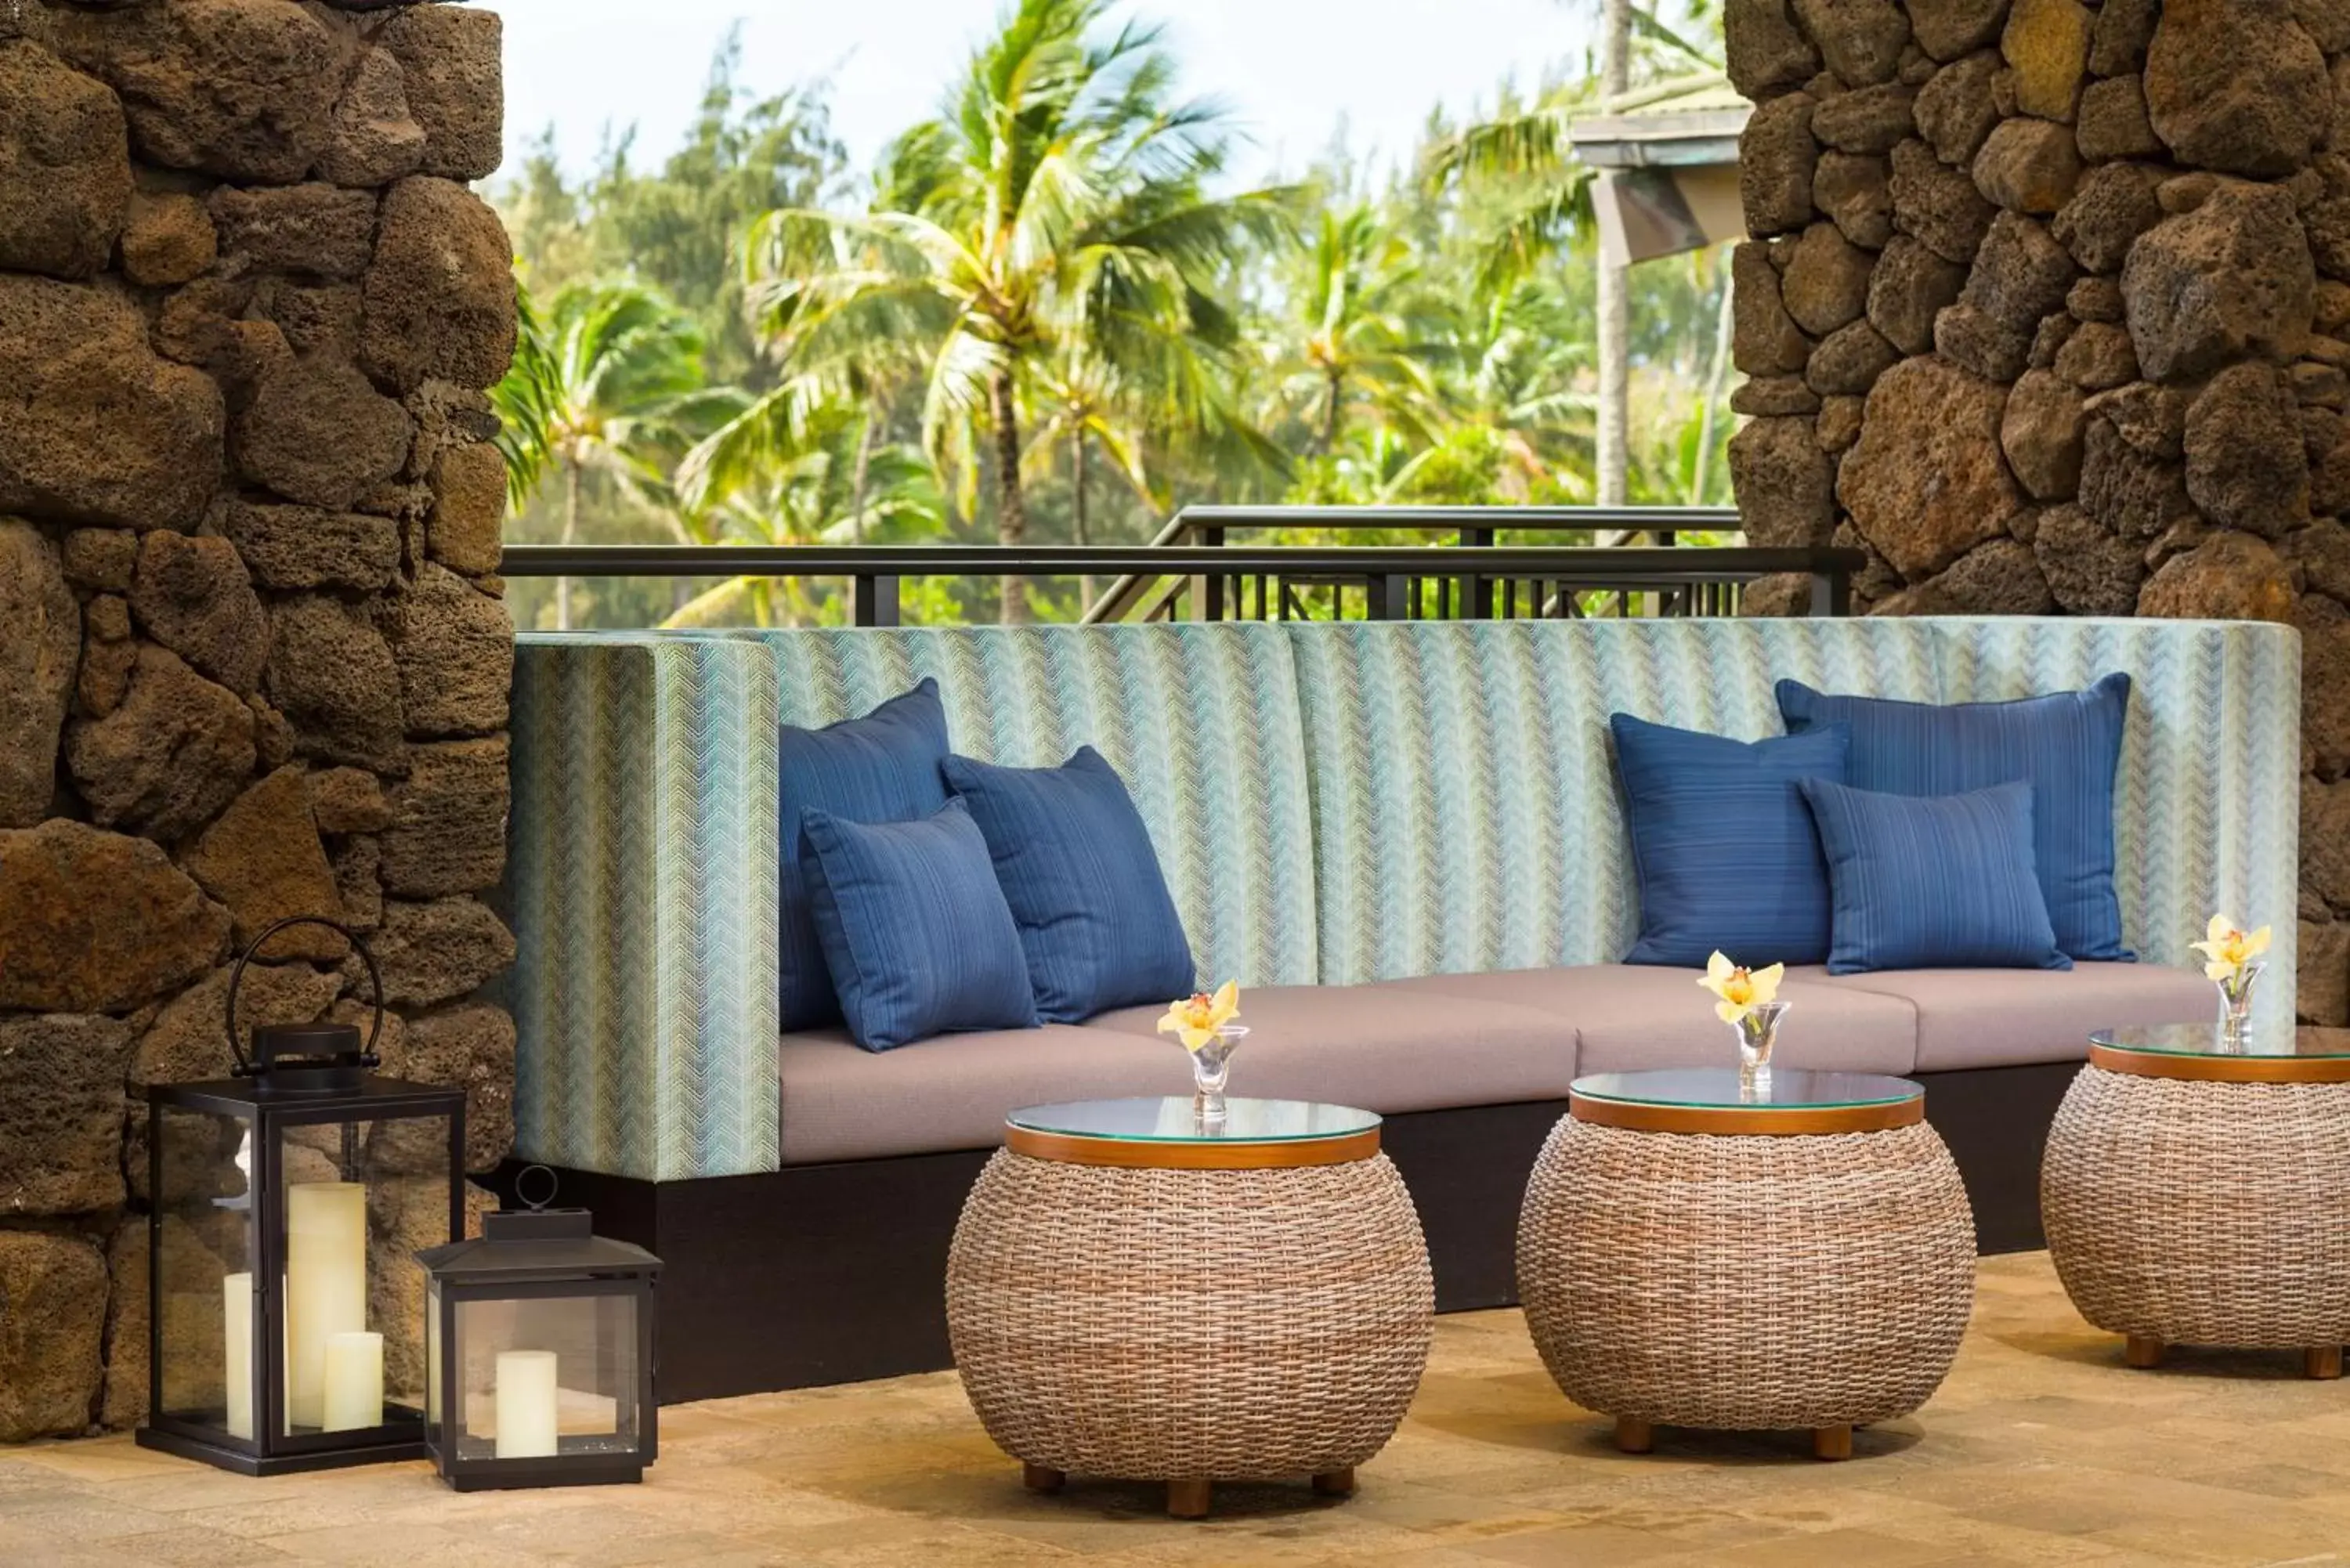 Inner courtyard view in Hilton Garden Inn Kauai Wailua Bay, HI